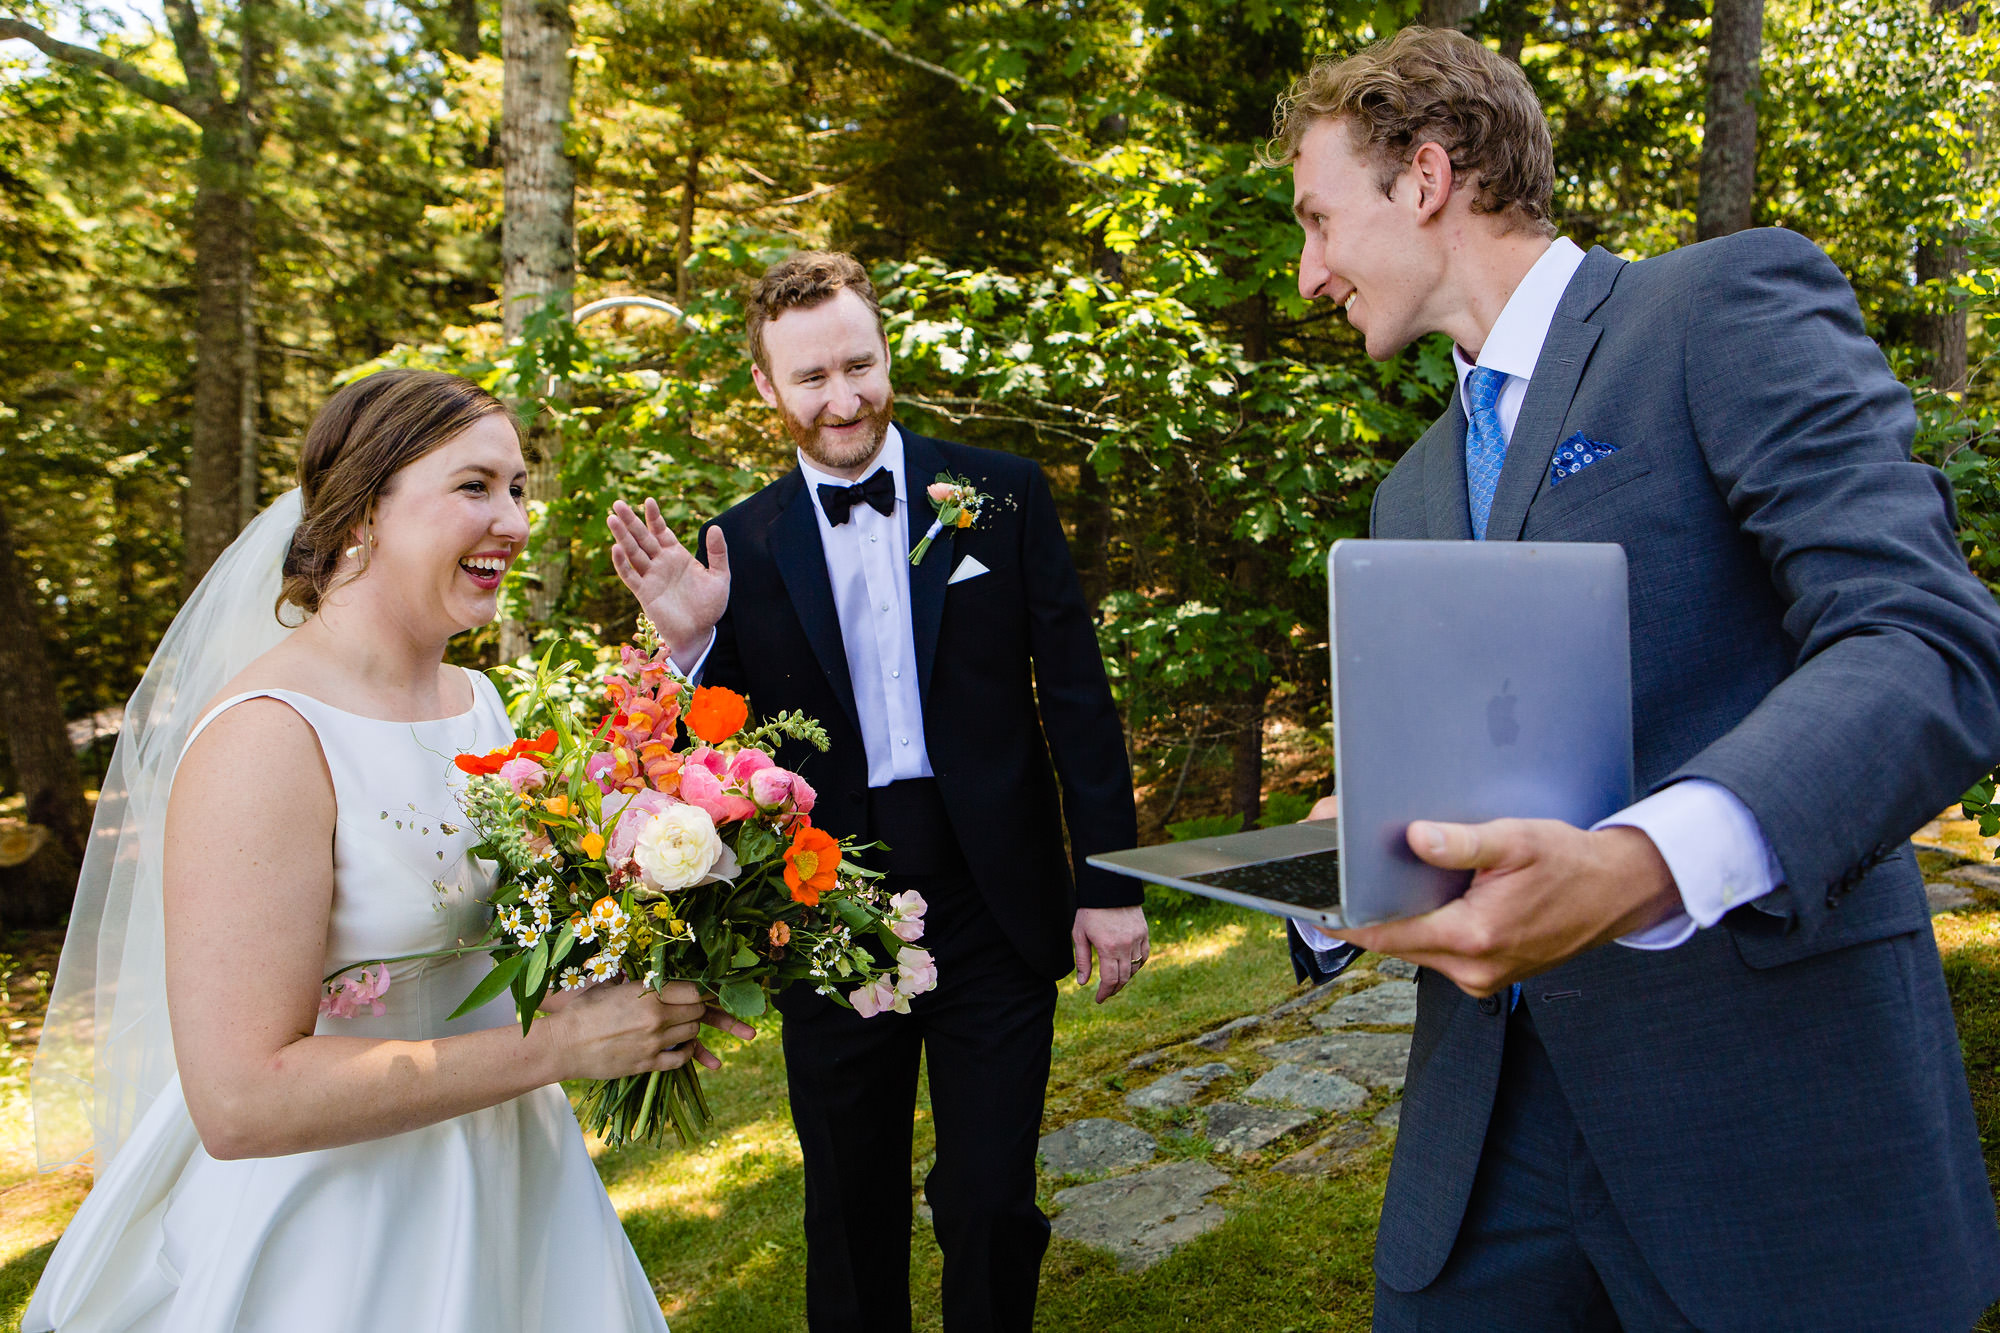 The bride and groom greet family via Skype